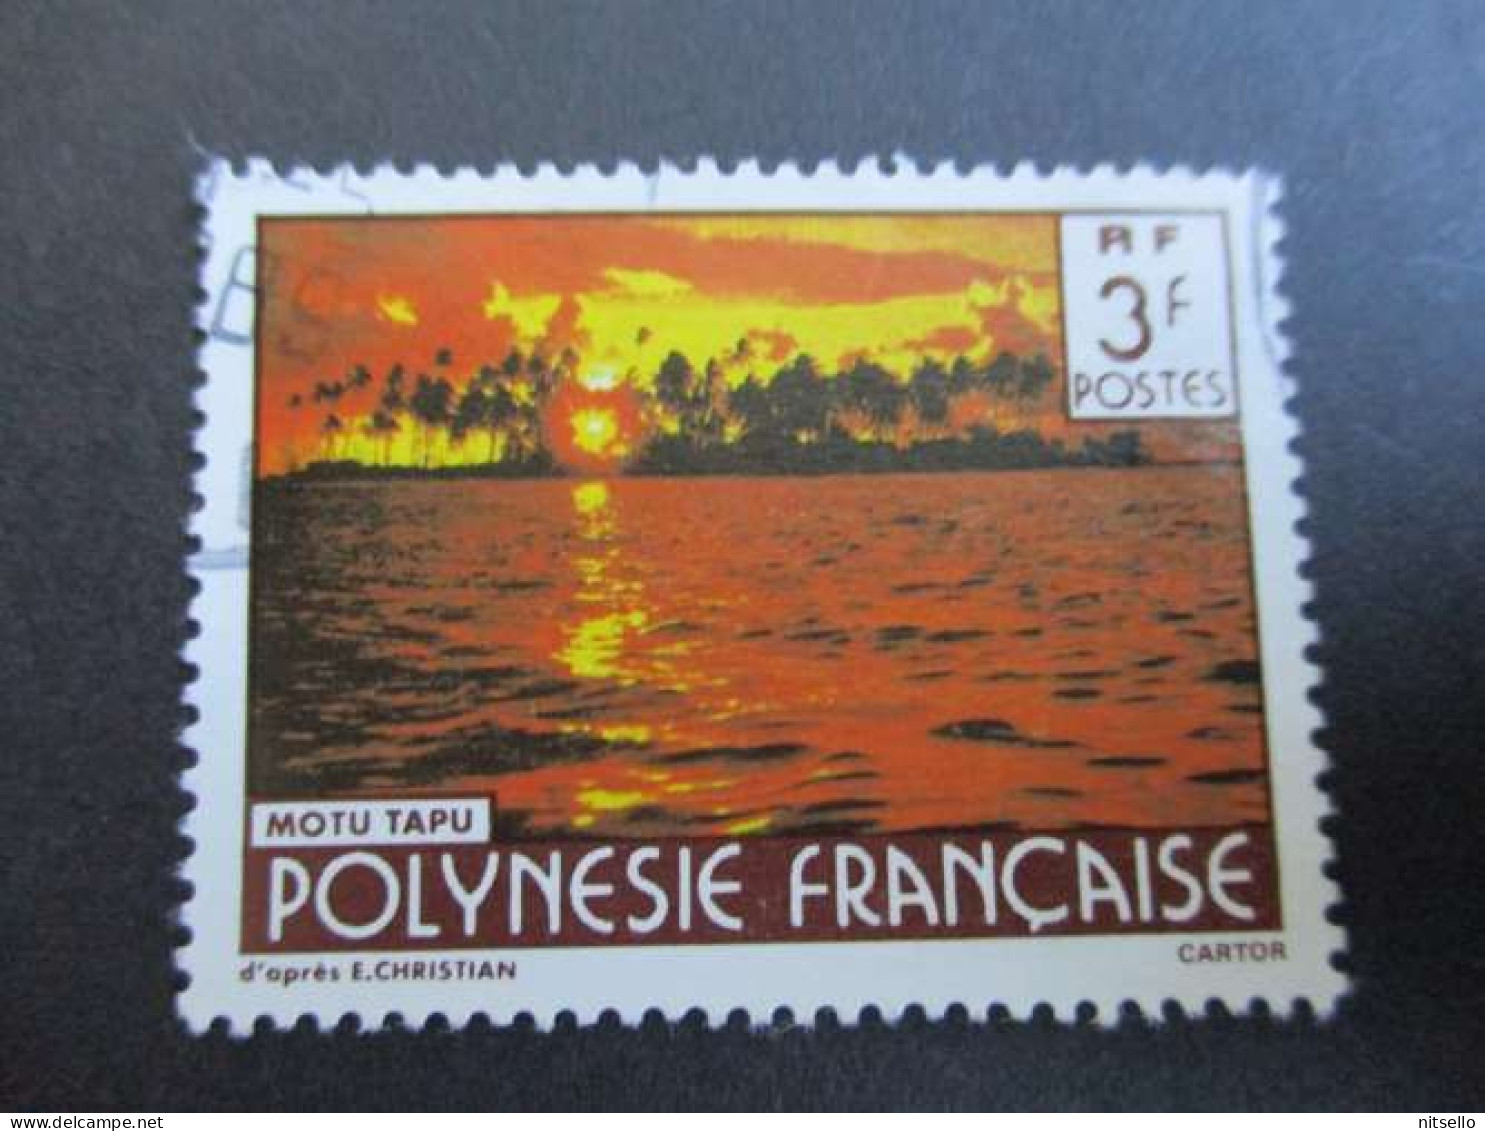 LOTE 2202A ///  (C015)  POLINESIA FRANCESA  - YVERT Nº: 253 OBL 1986  ¡¡¡ OFERTA - LIQUIDATION - JE LIQUIDE !!! - Used Stamps